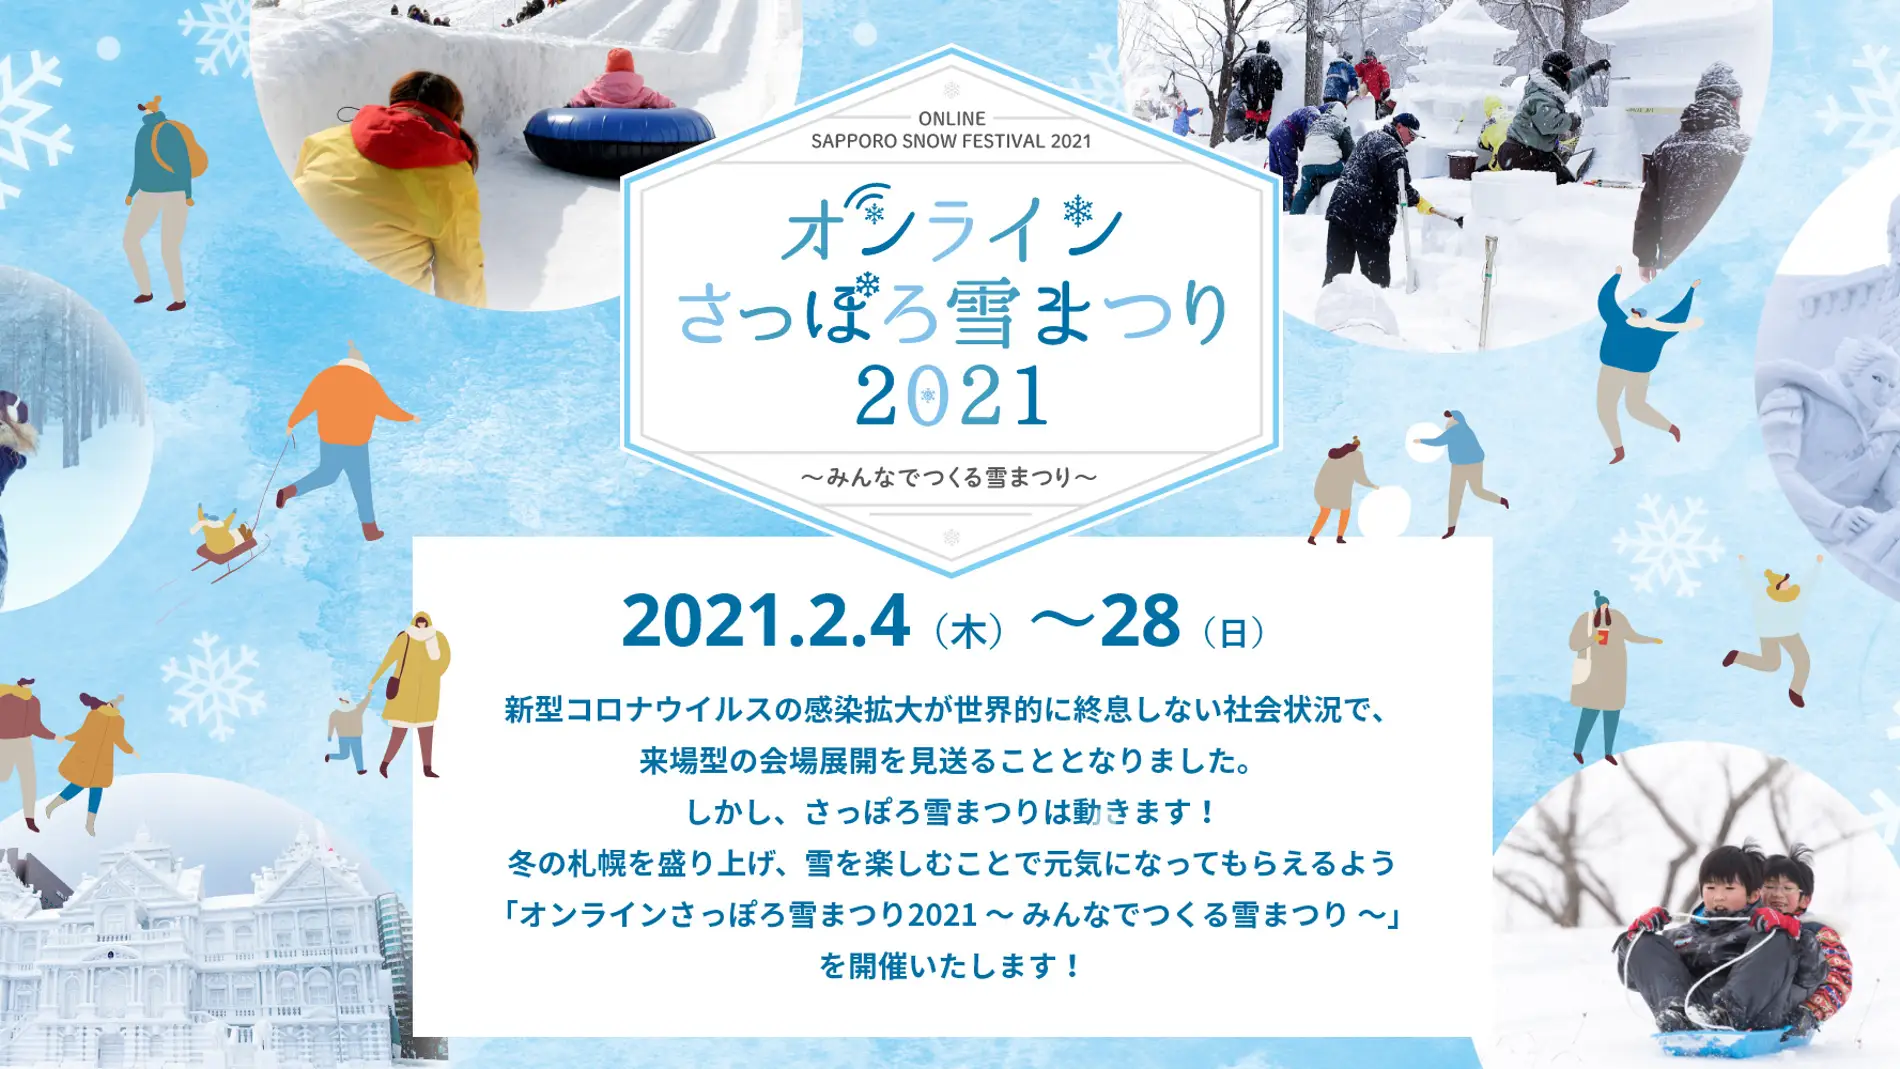 Festival de Nieve de Sapporo